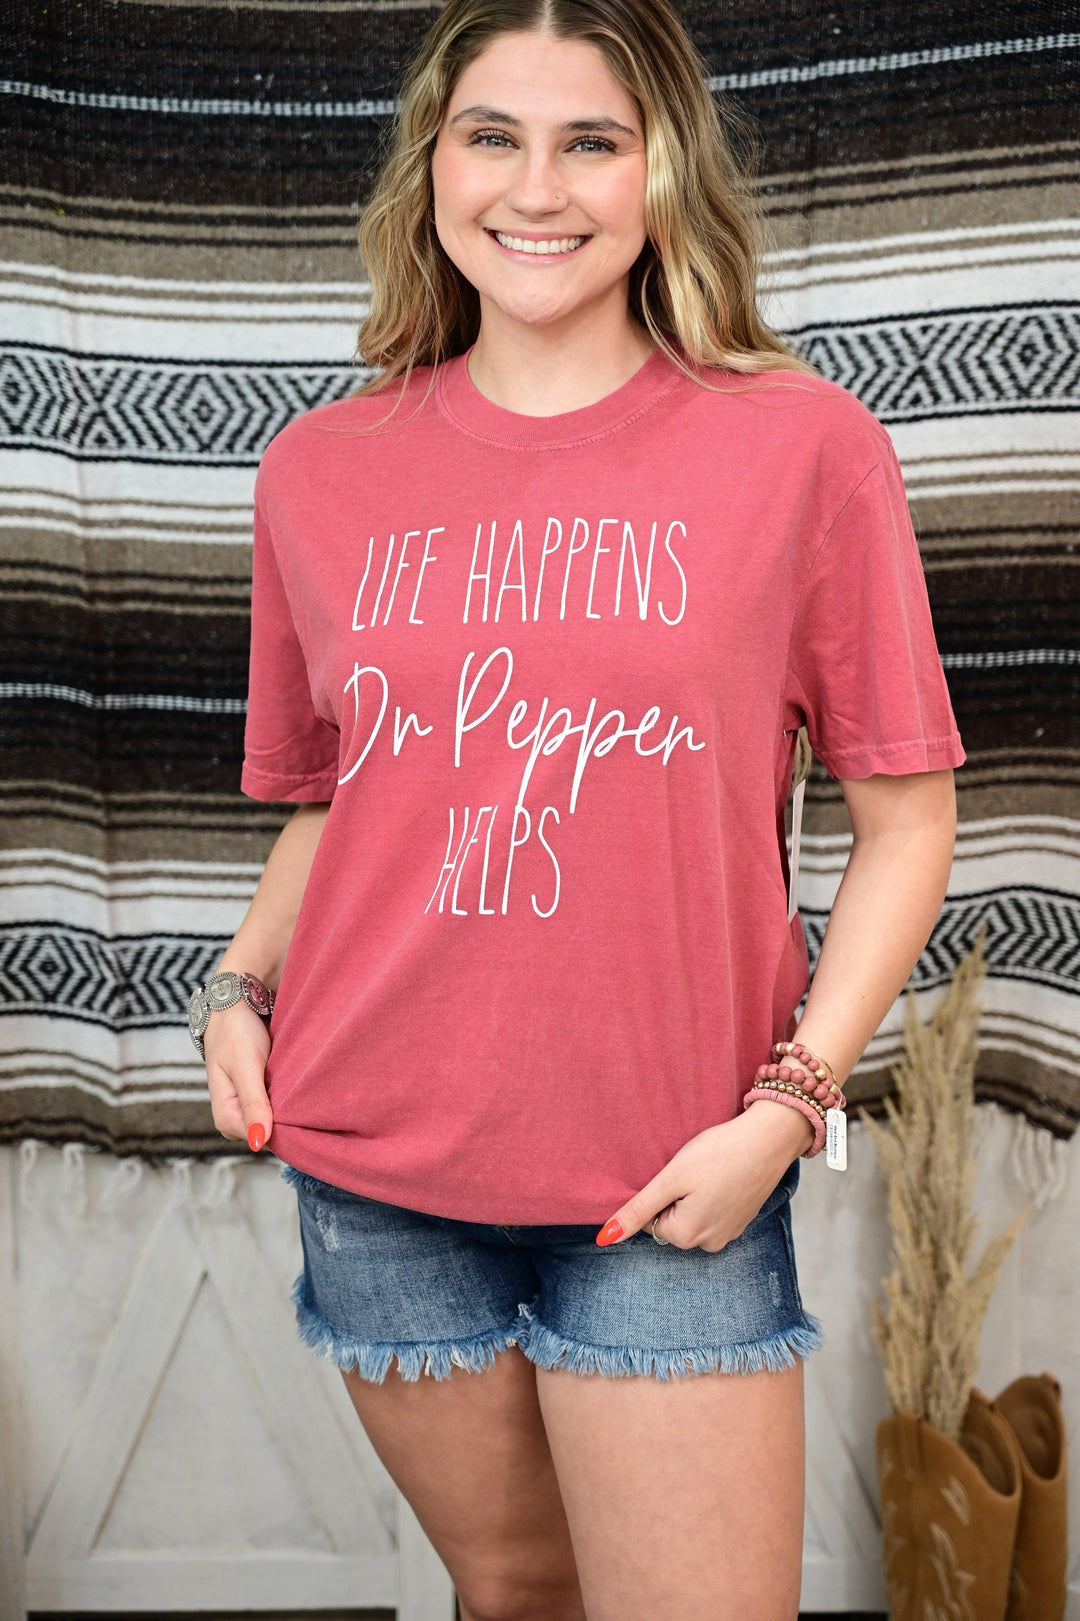 Life Happens Dr. Pepper Helps Comfort Colors Tee S-XL - West End Boutique